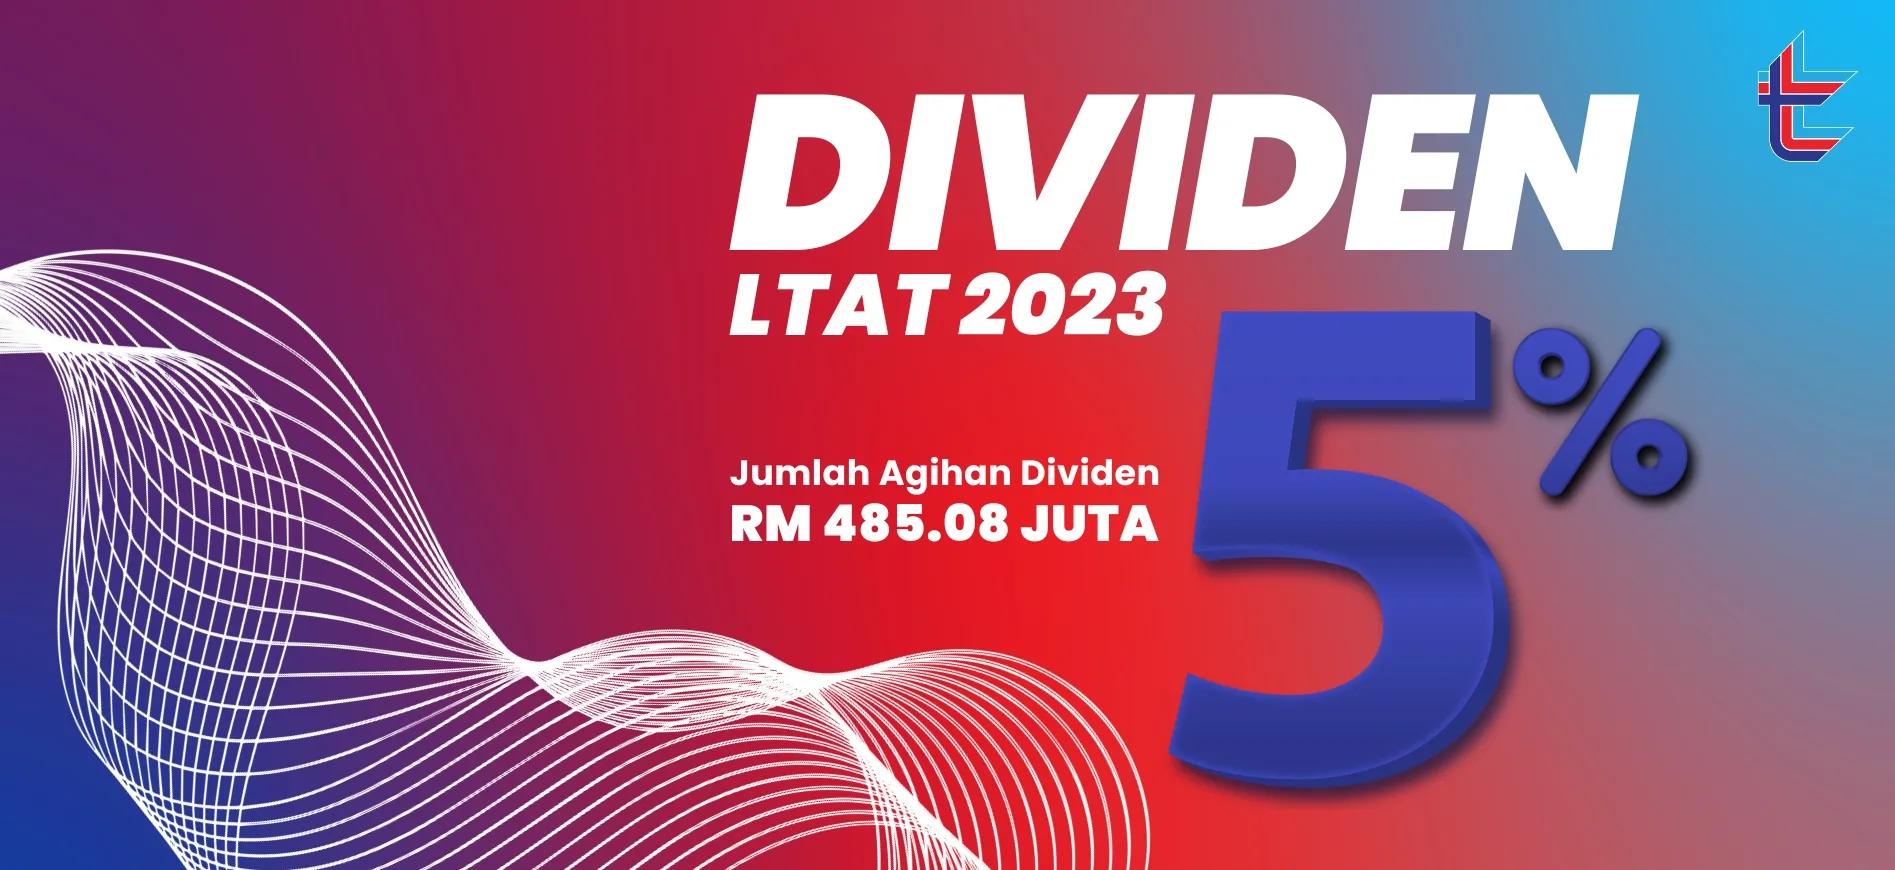 Dividen LTAT 2023_Website